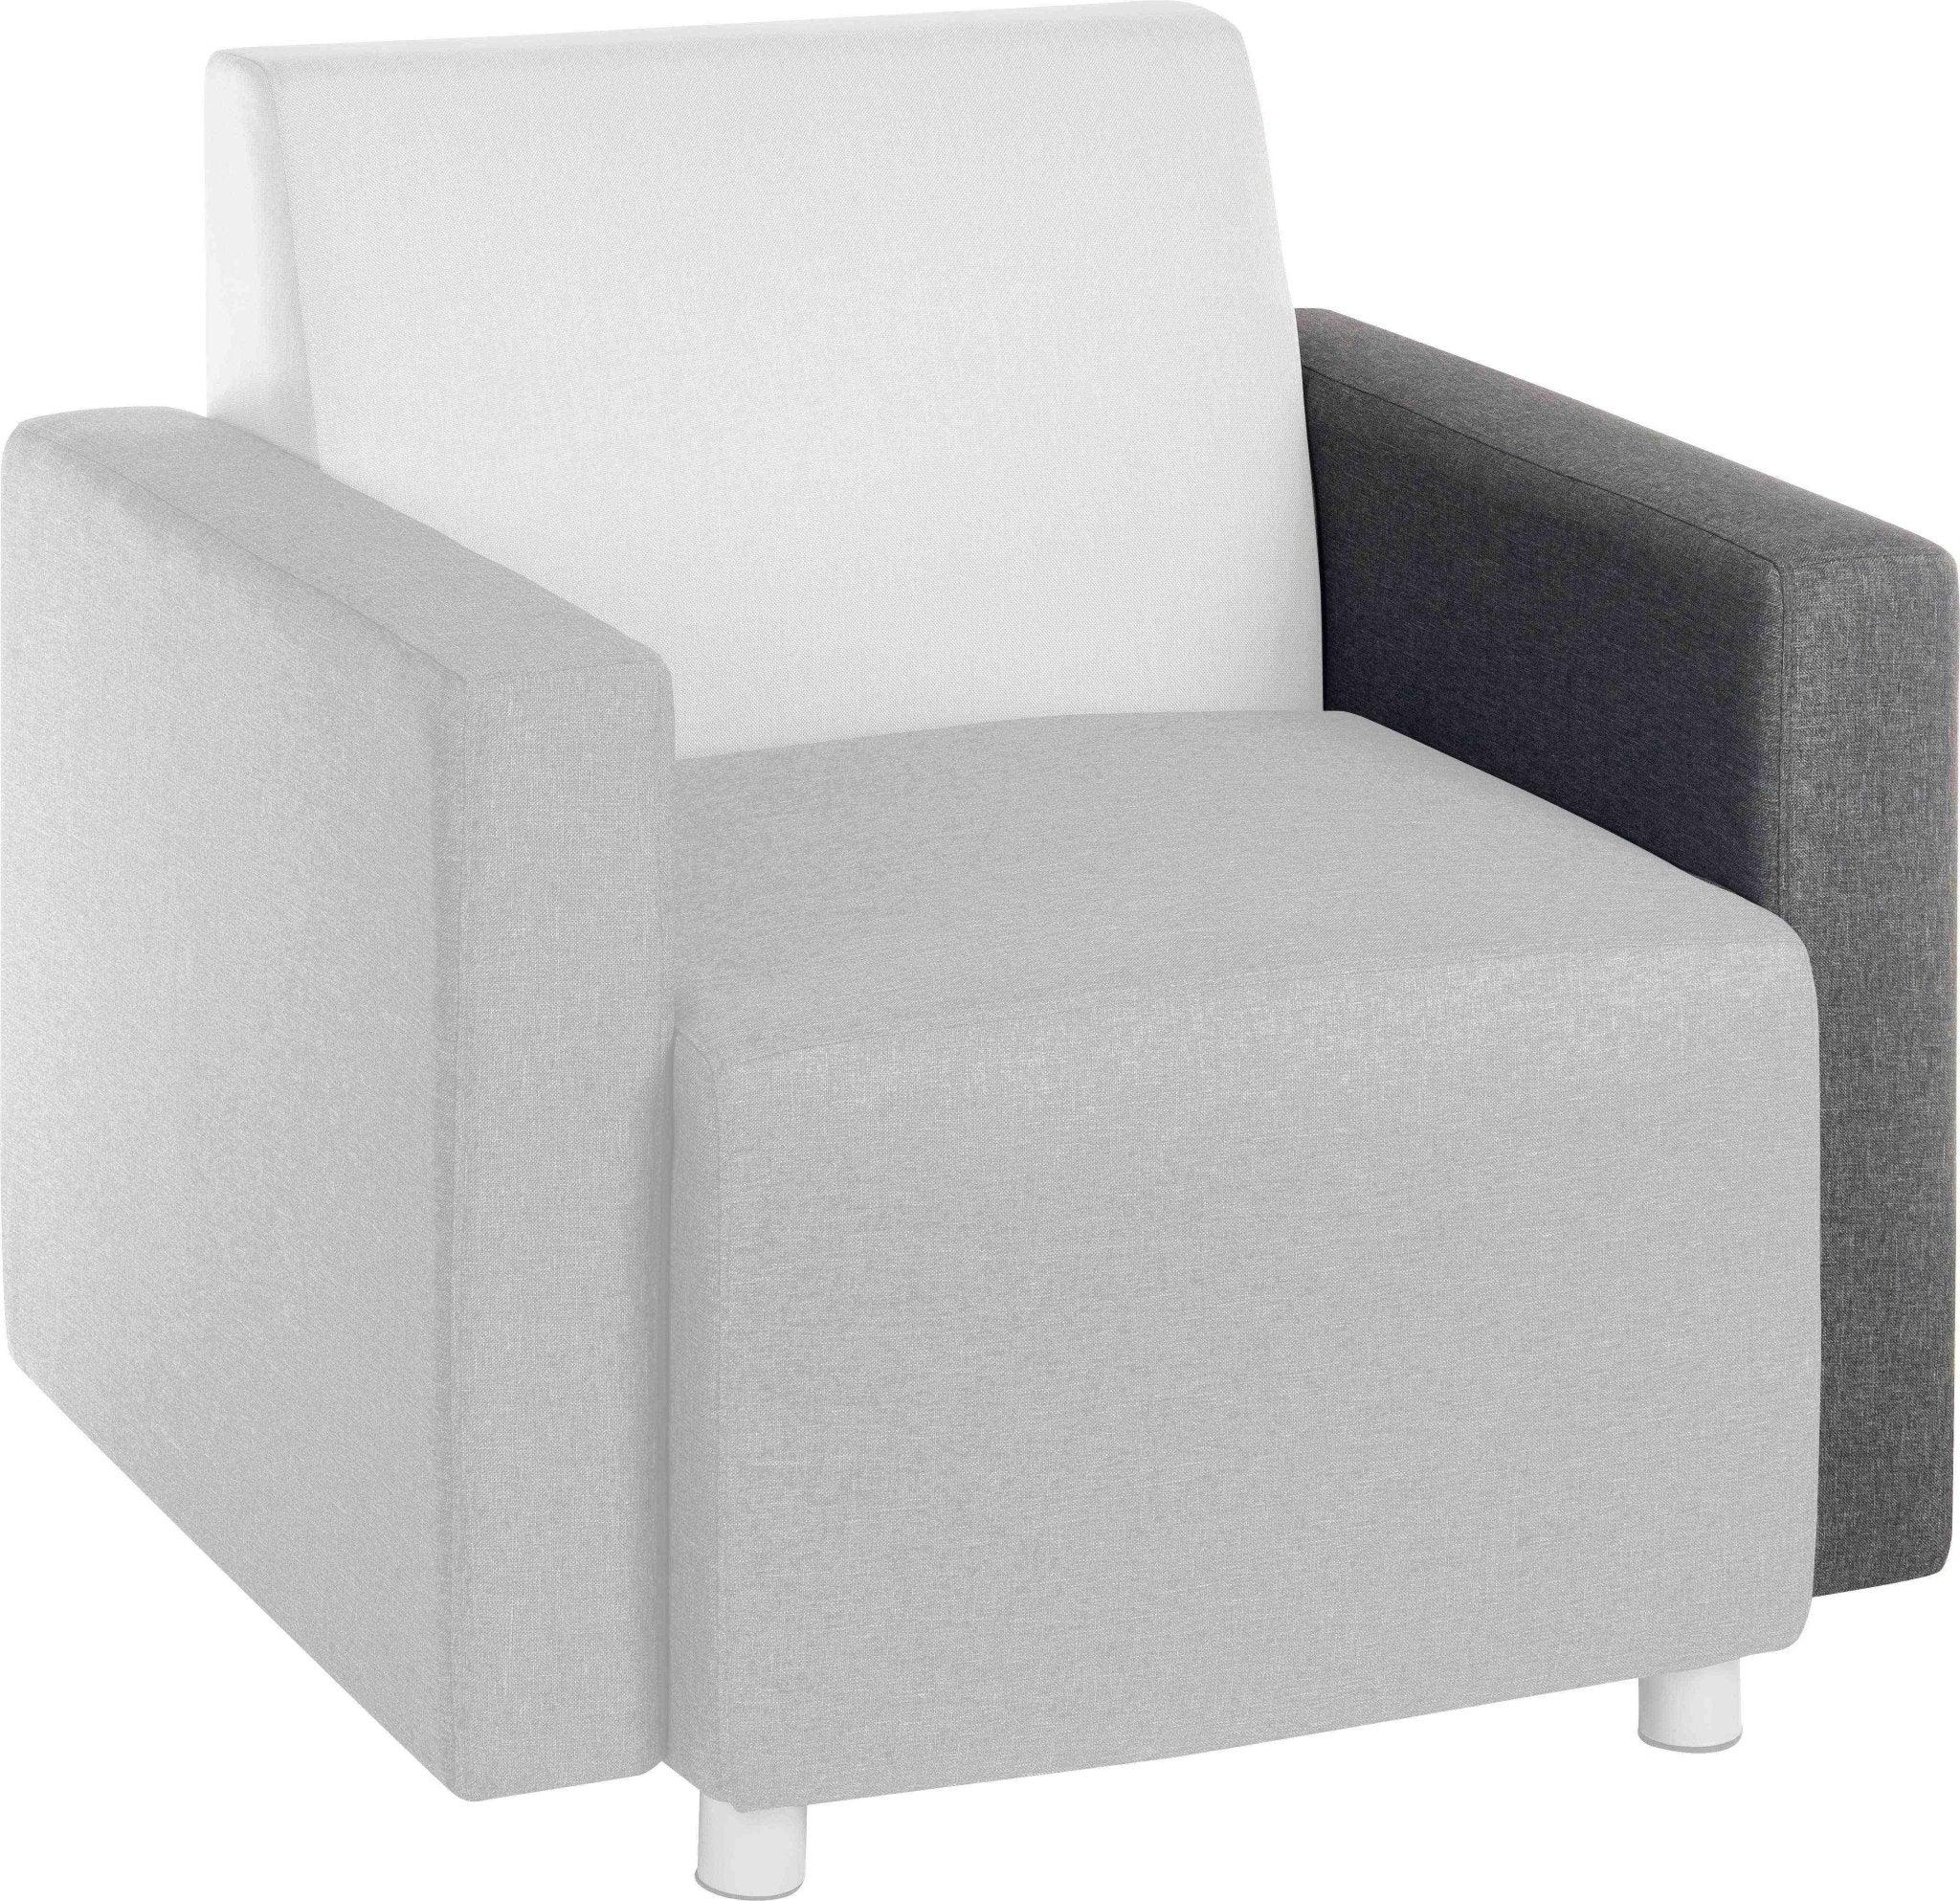 Cube modular reception chair arm (l+r) - image 1